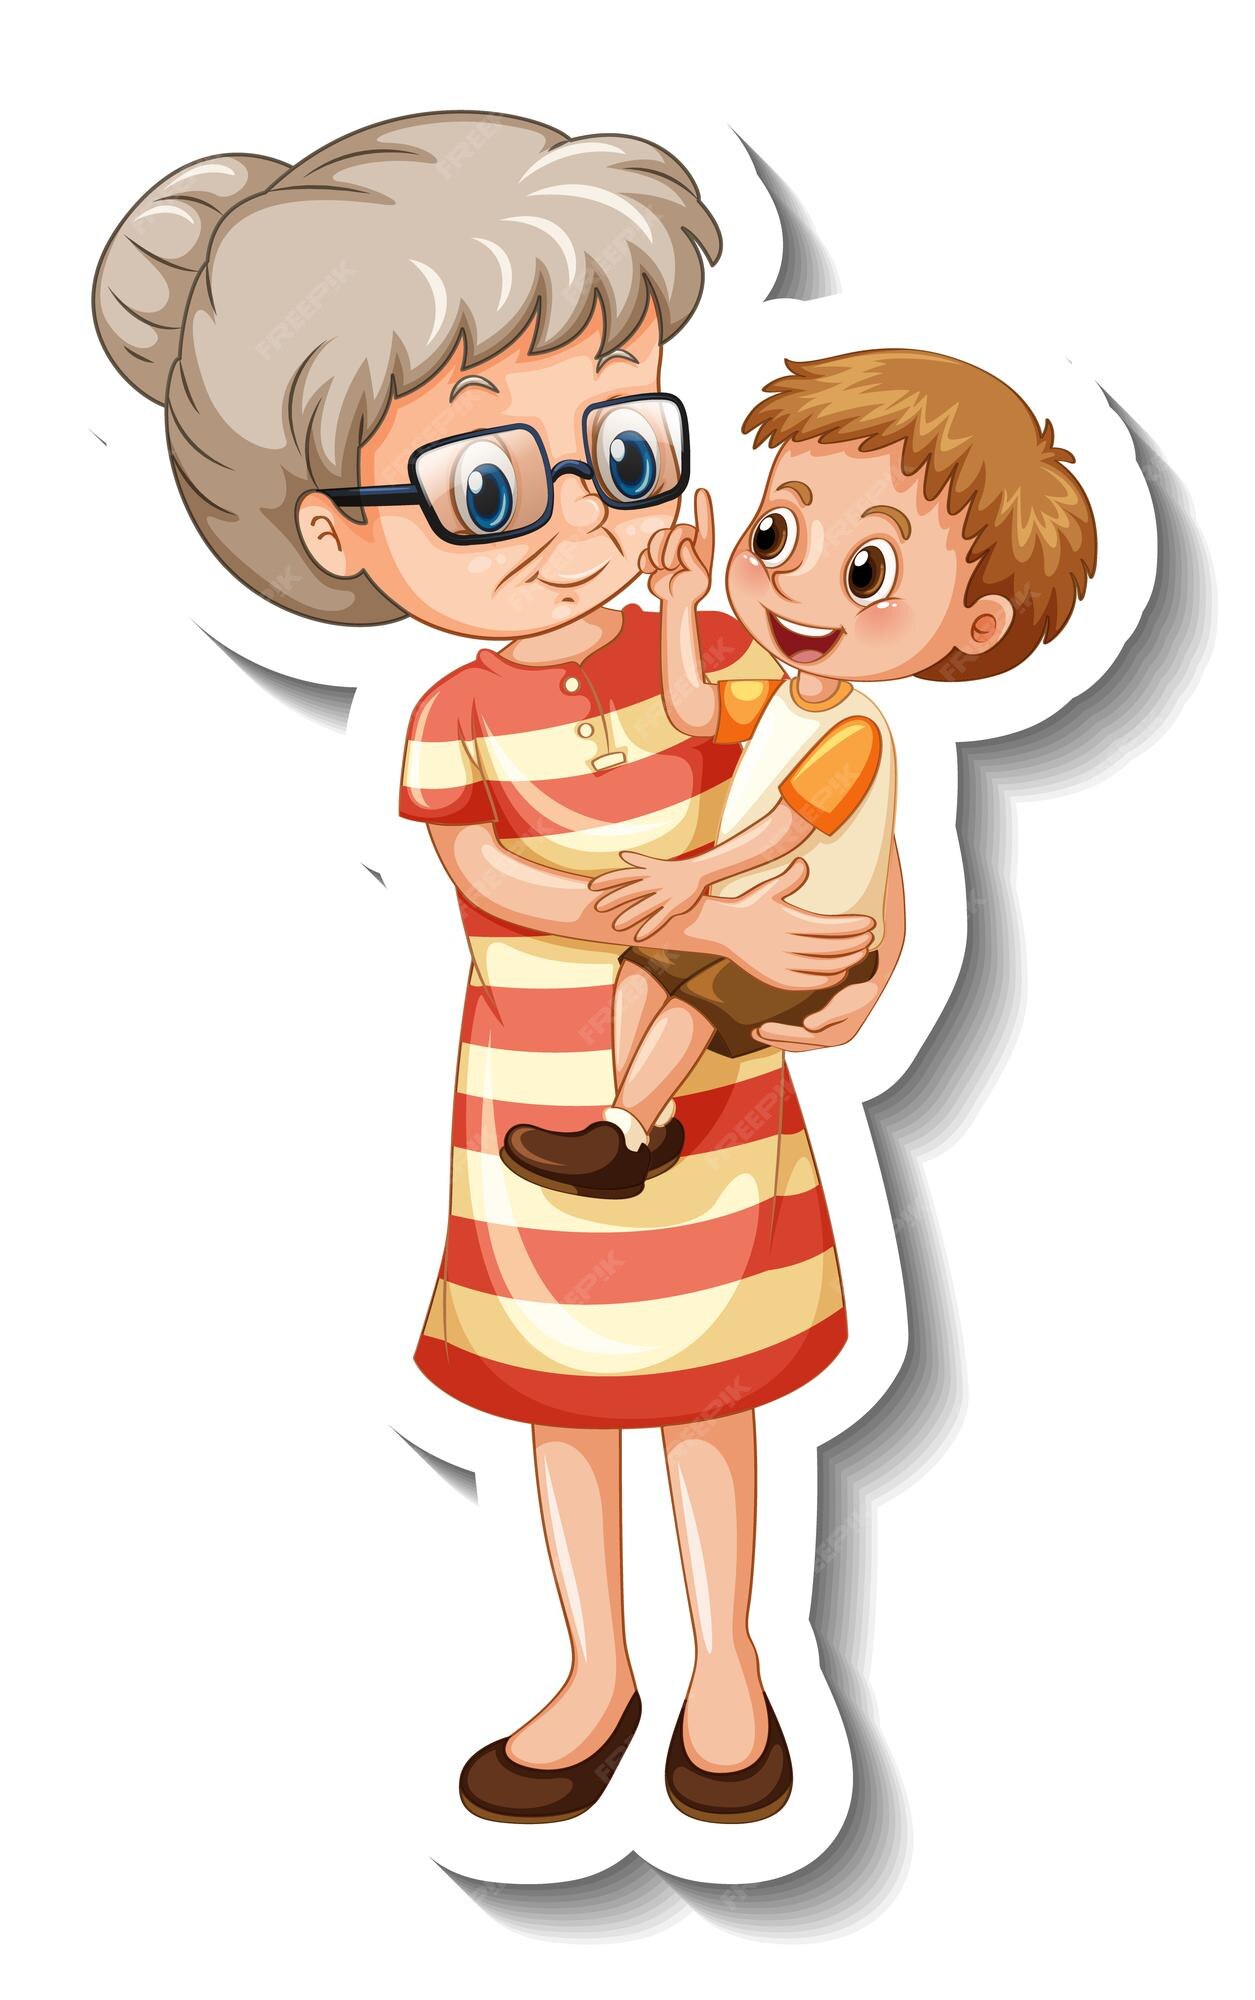 Granny Cartoon Images - Free Download on Freepik